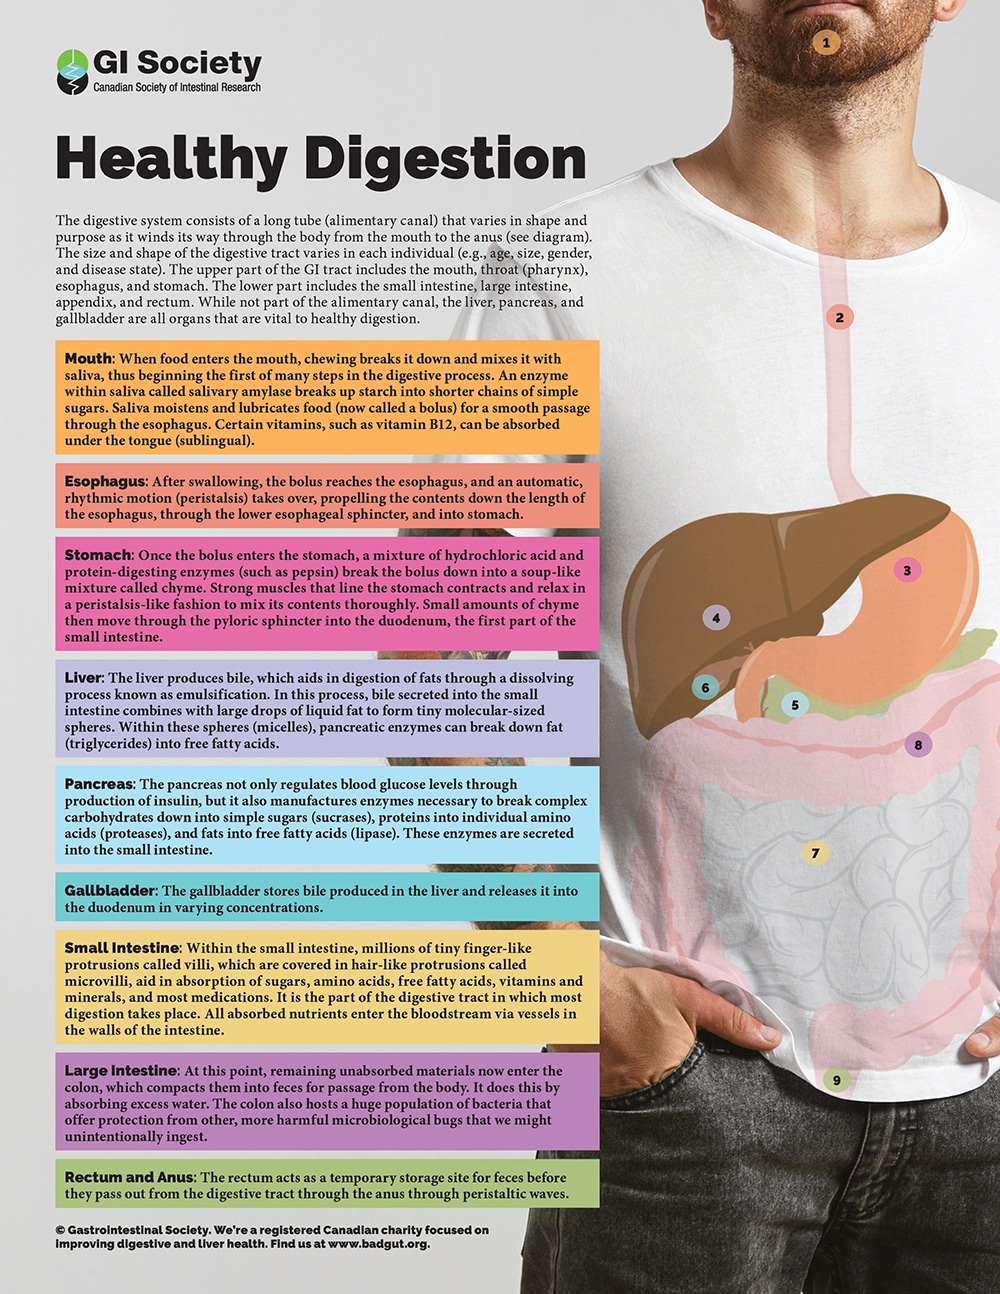 Digestive health information